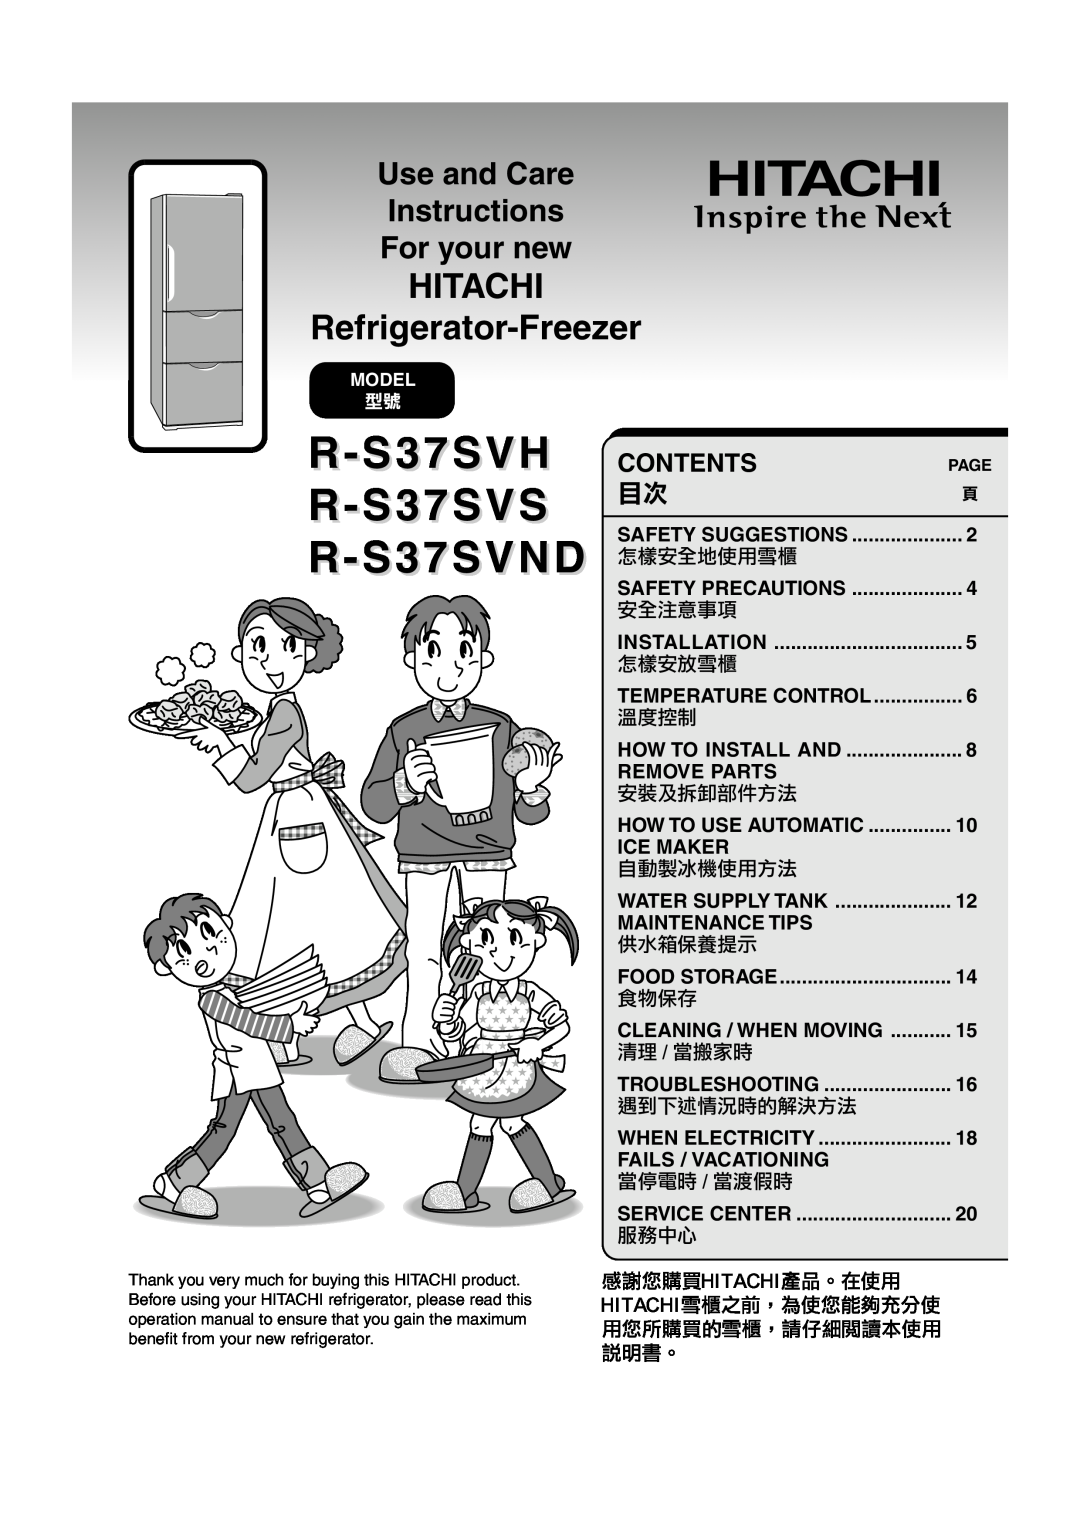 Hitachi operation manual R-S37SVH R-S37SVS R-S37SVND, HITACHI Refrigerator-Freezer, Contents,  !#$%, Remove Parts 